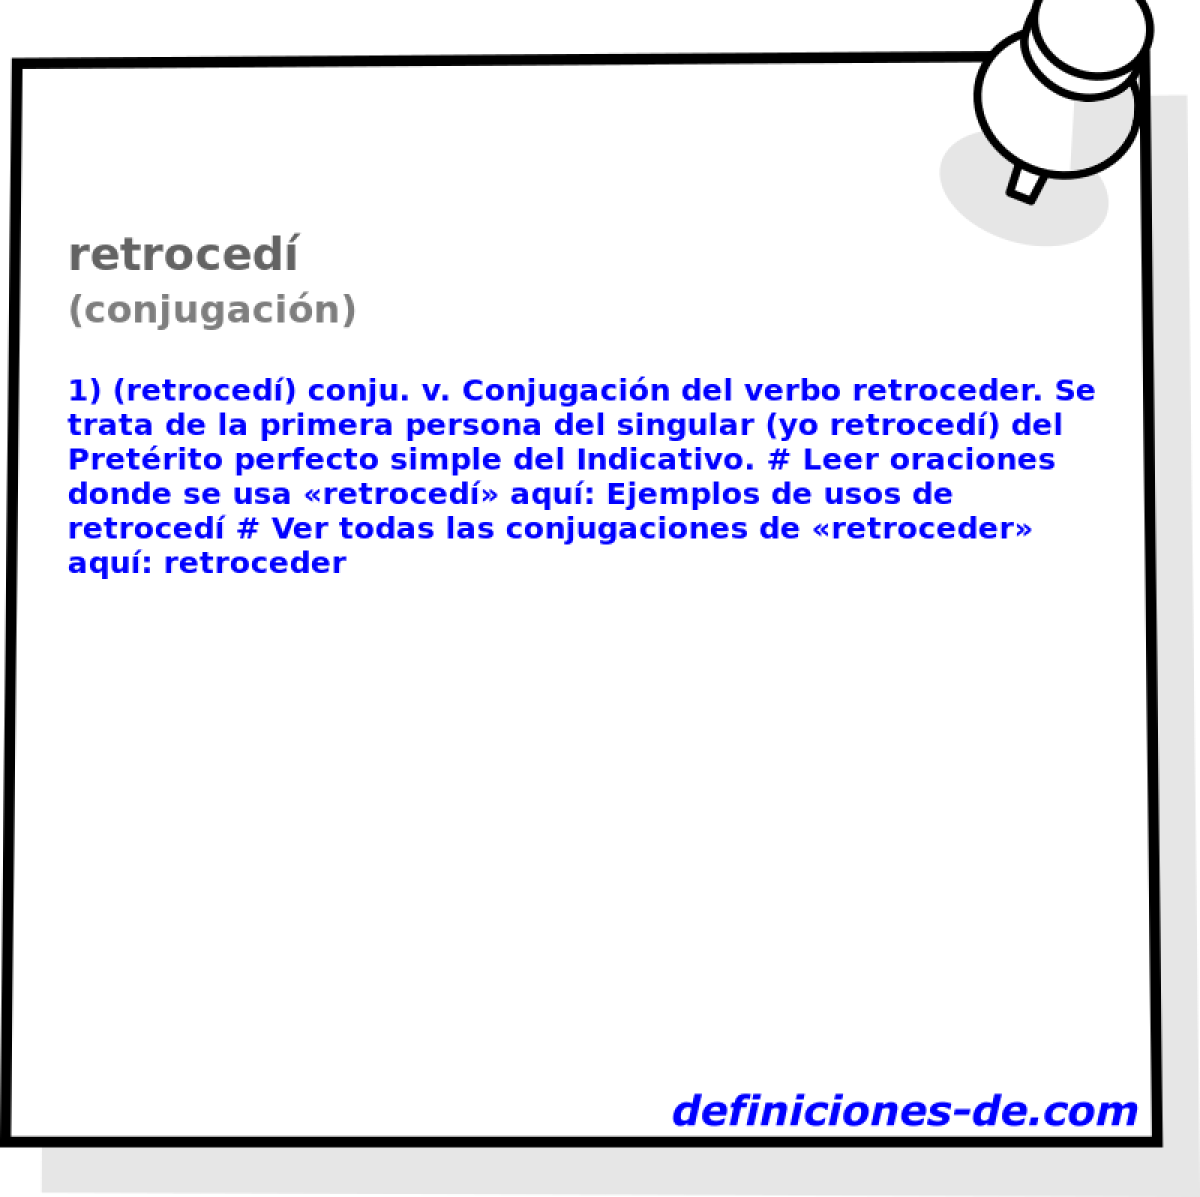 retroced (conjugacin)